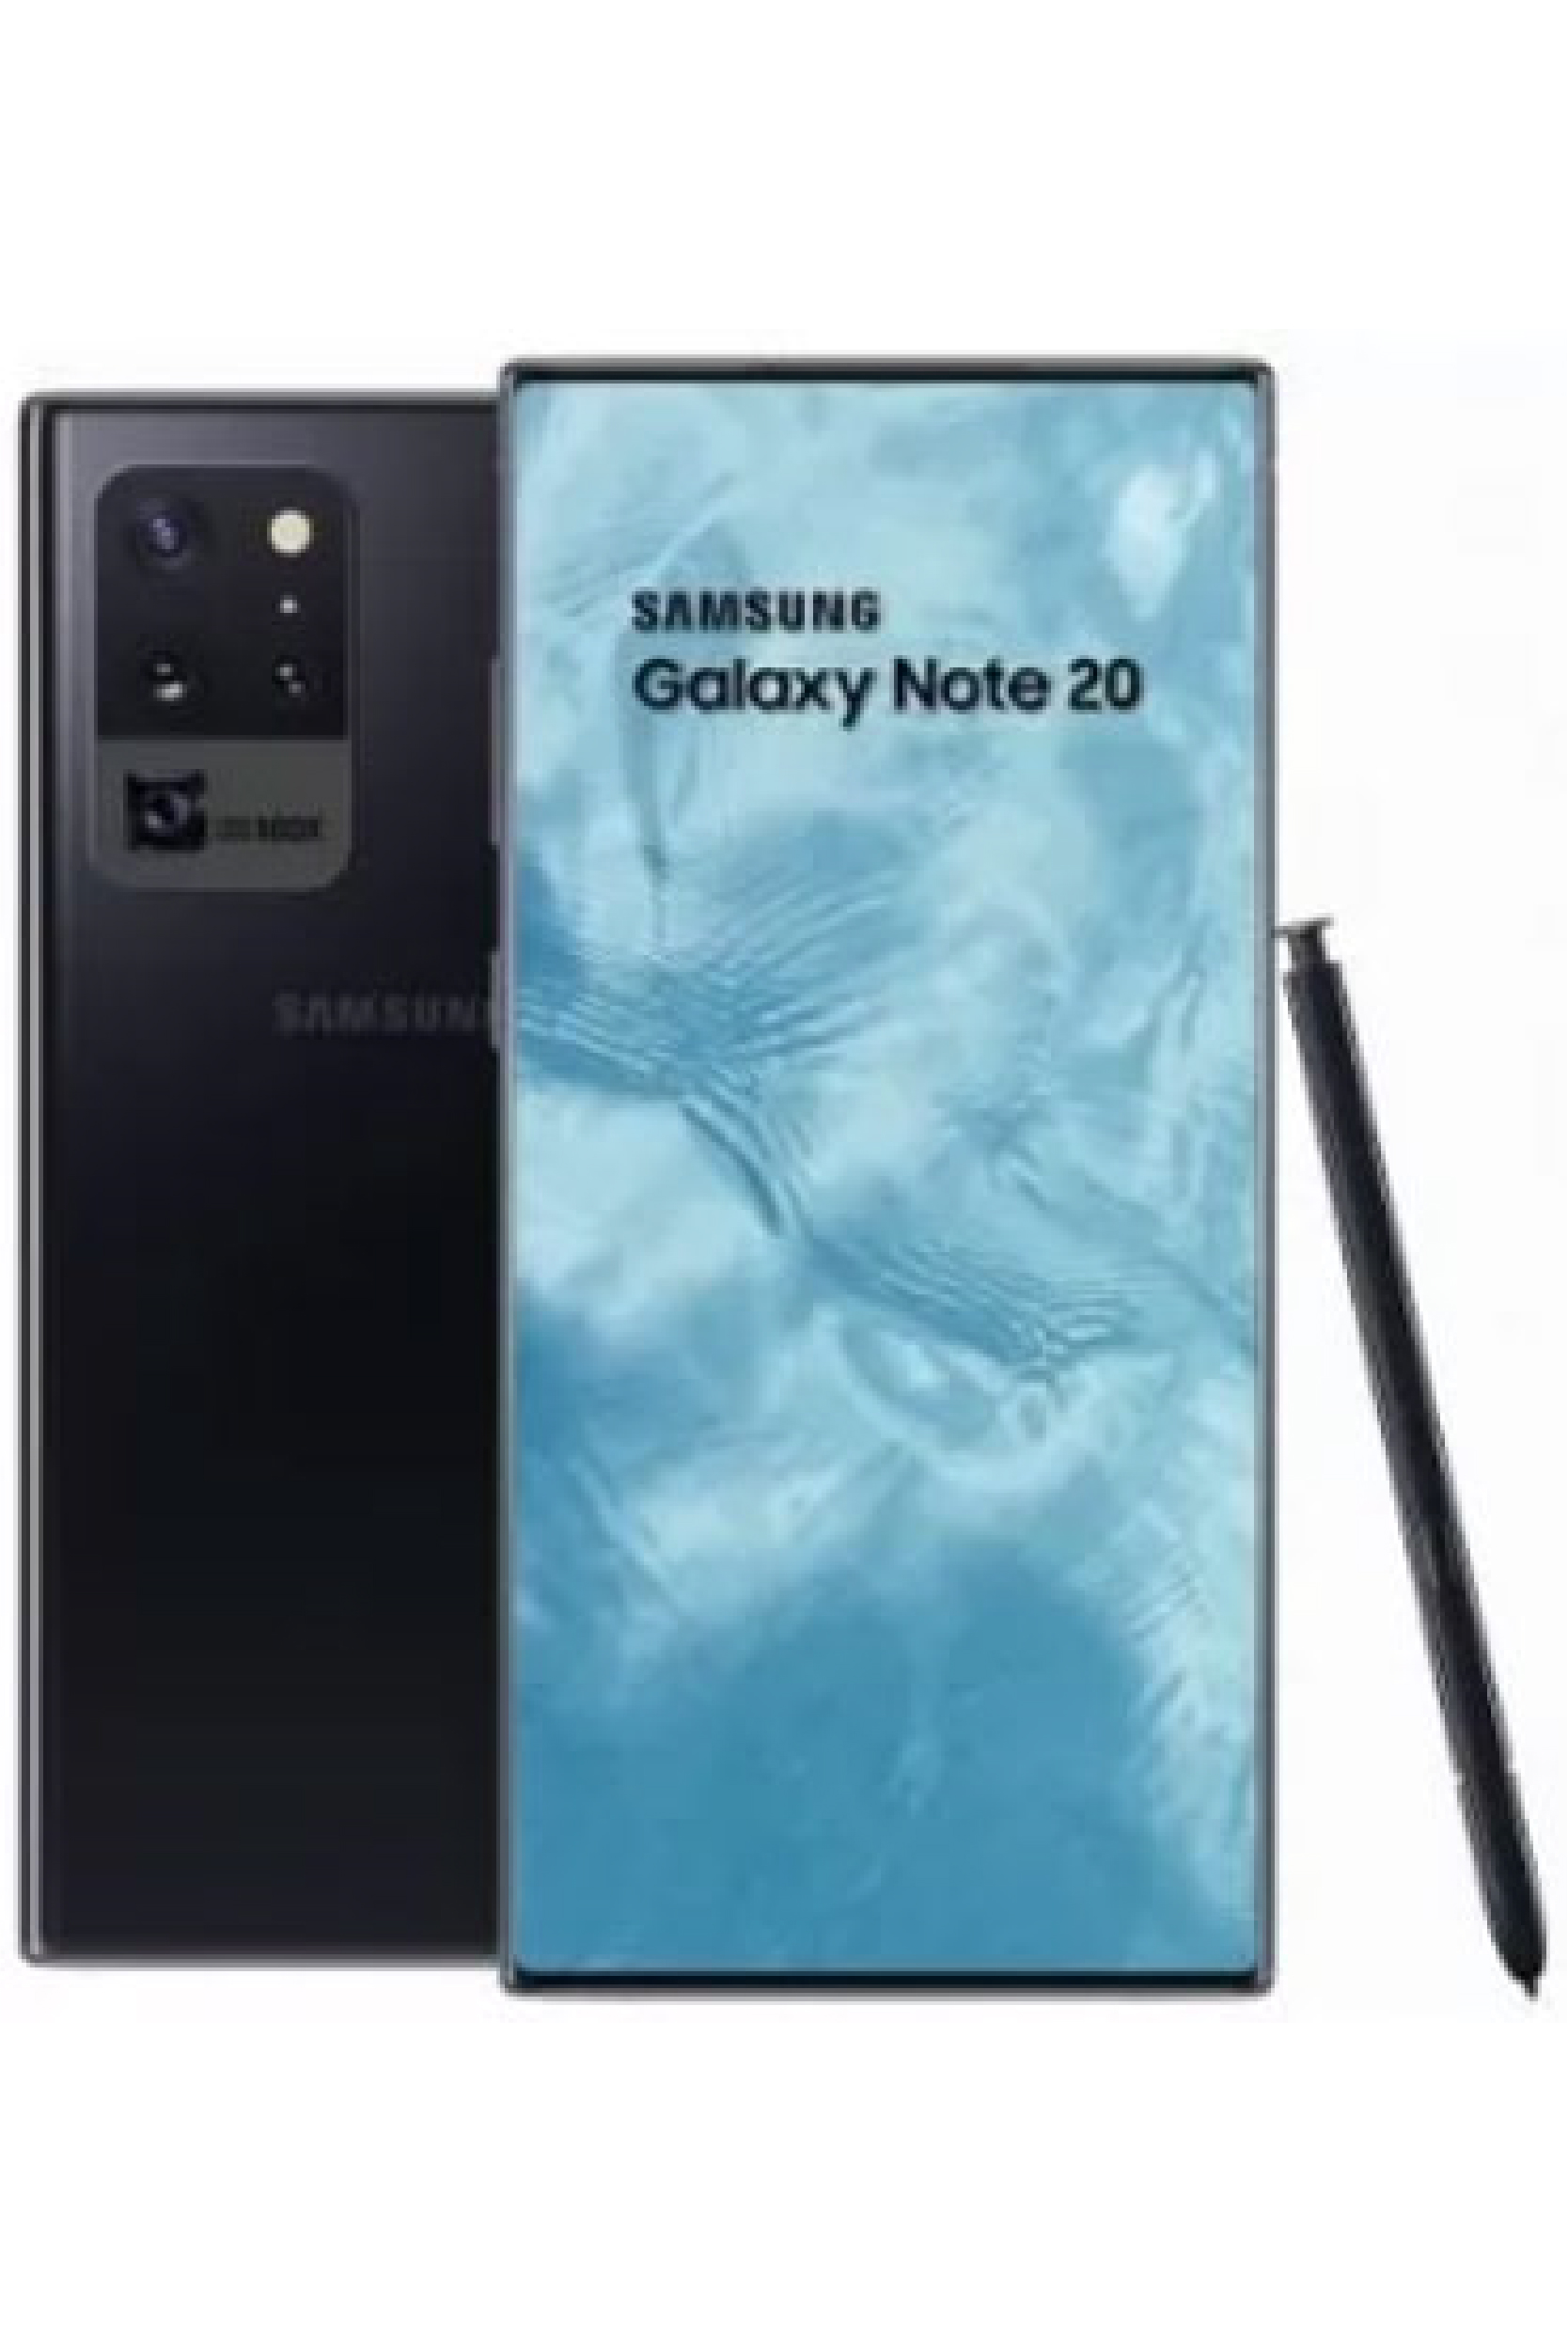 Samsung Galaxy Note 20 Ultra Price in Pakistan & Specs